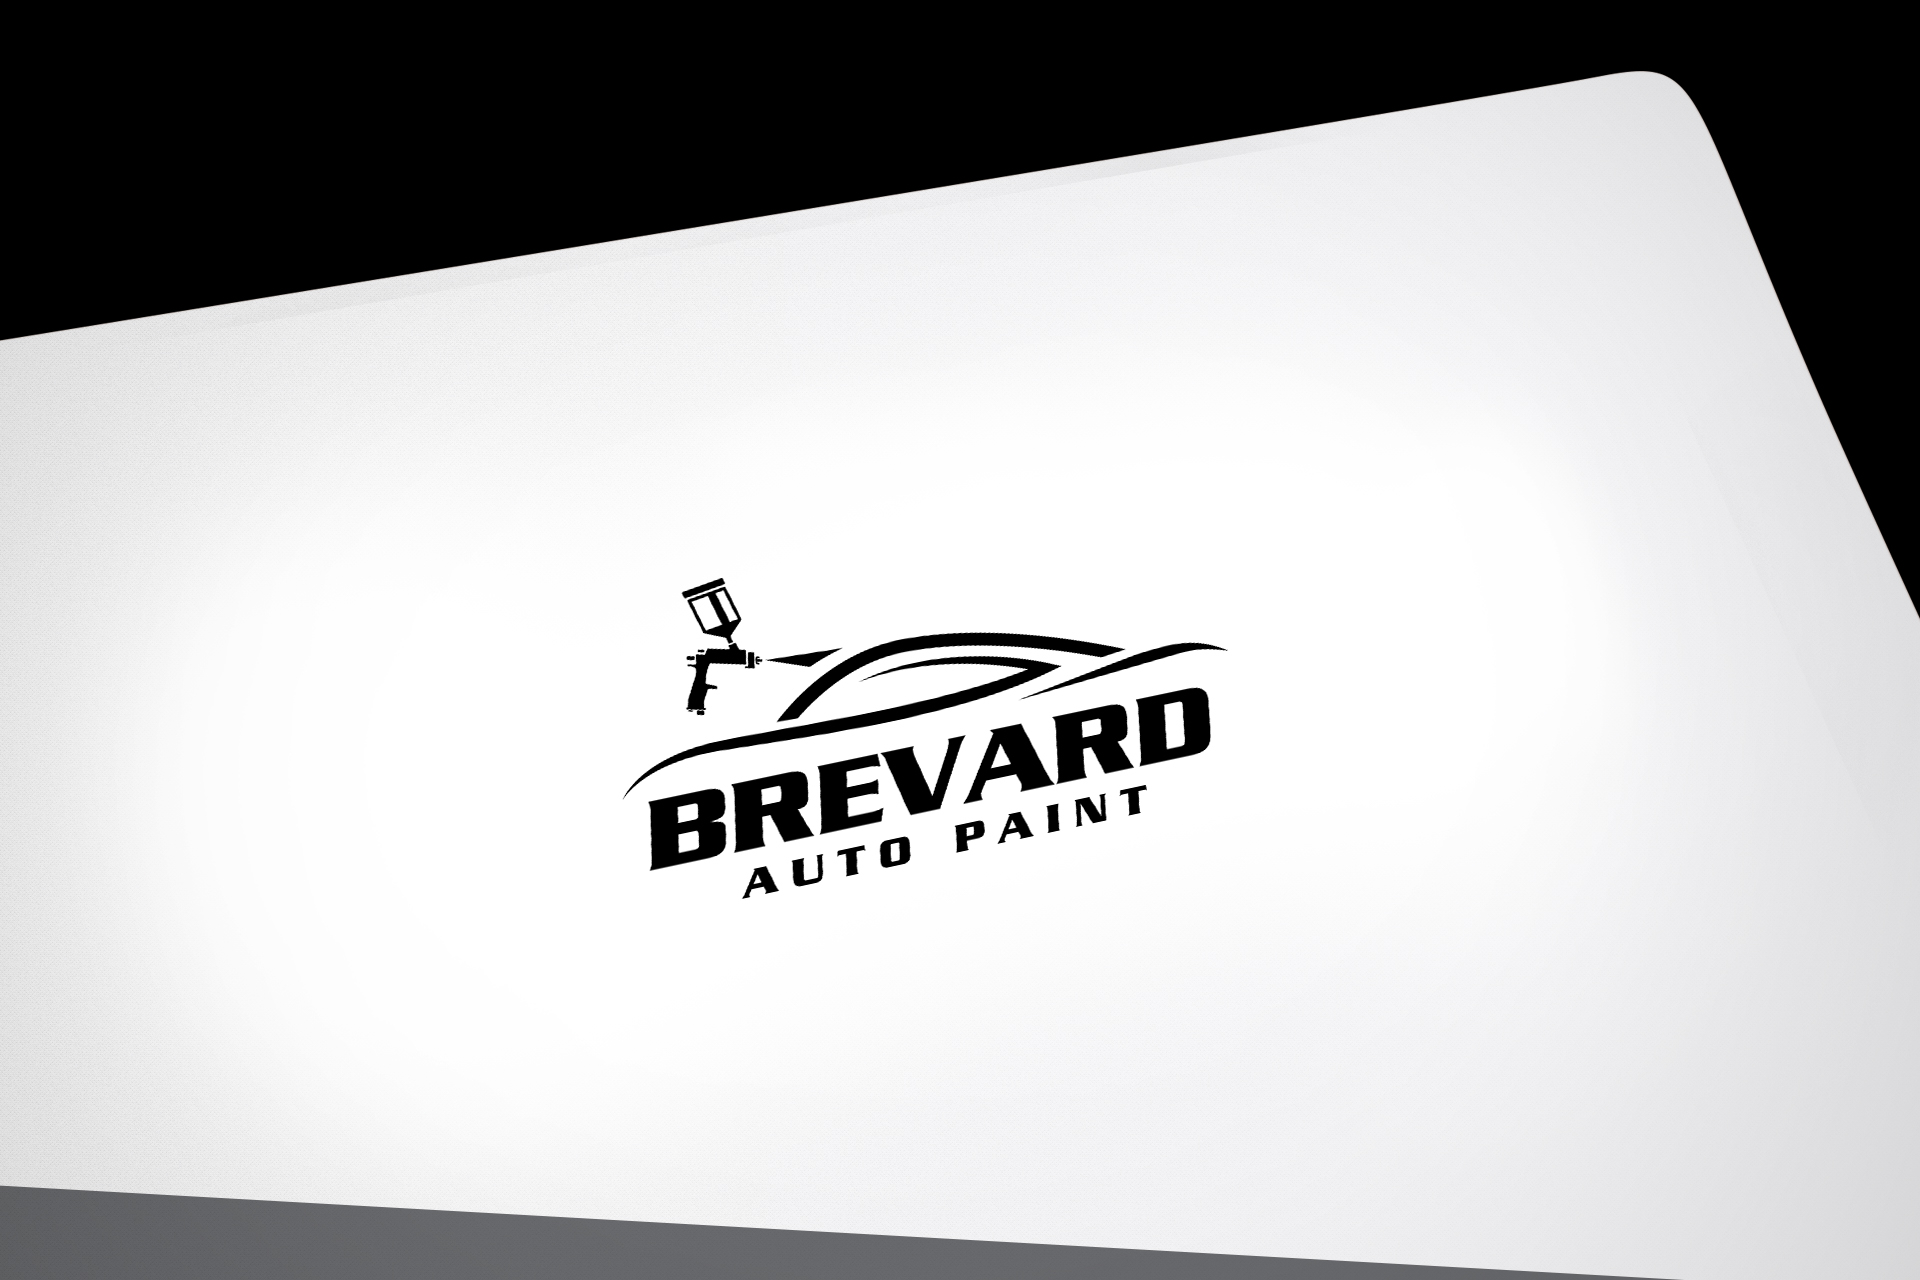 Brevard Auto Paint Design #6